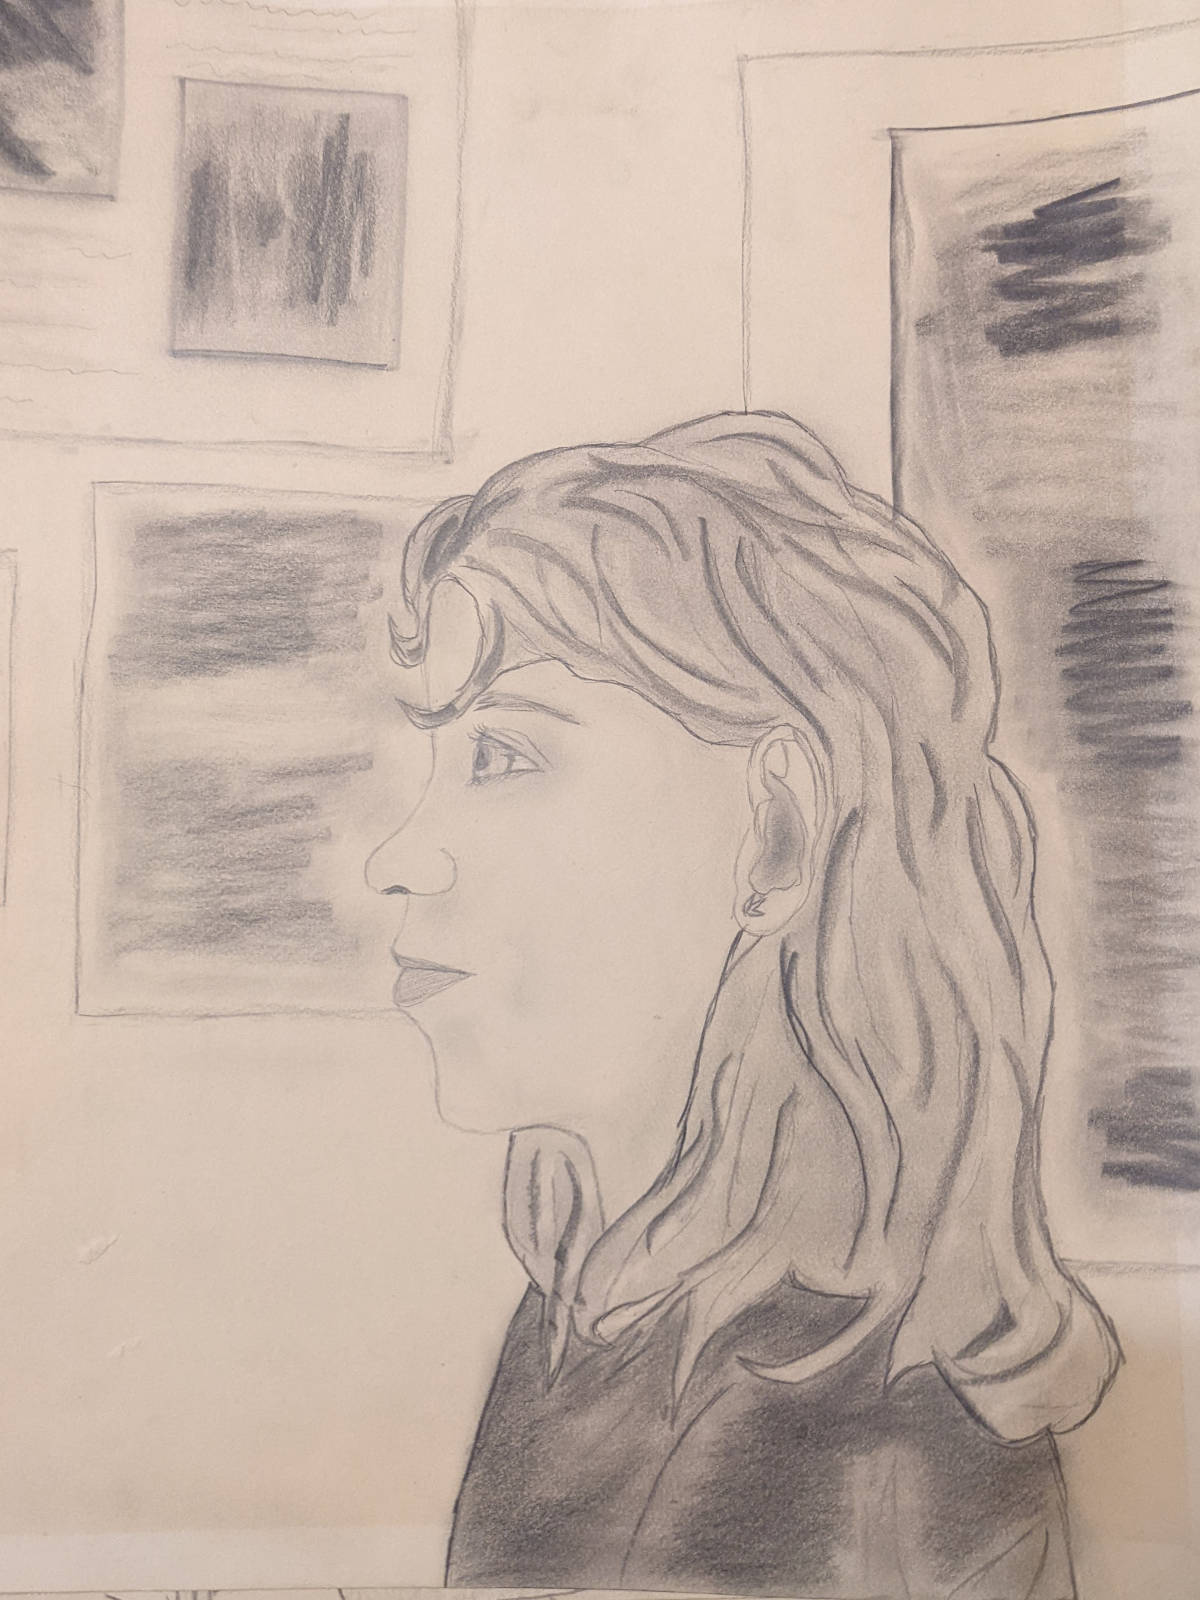 Pencil-drawn portrait of a teen girl.